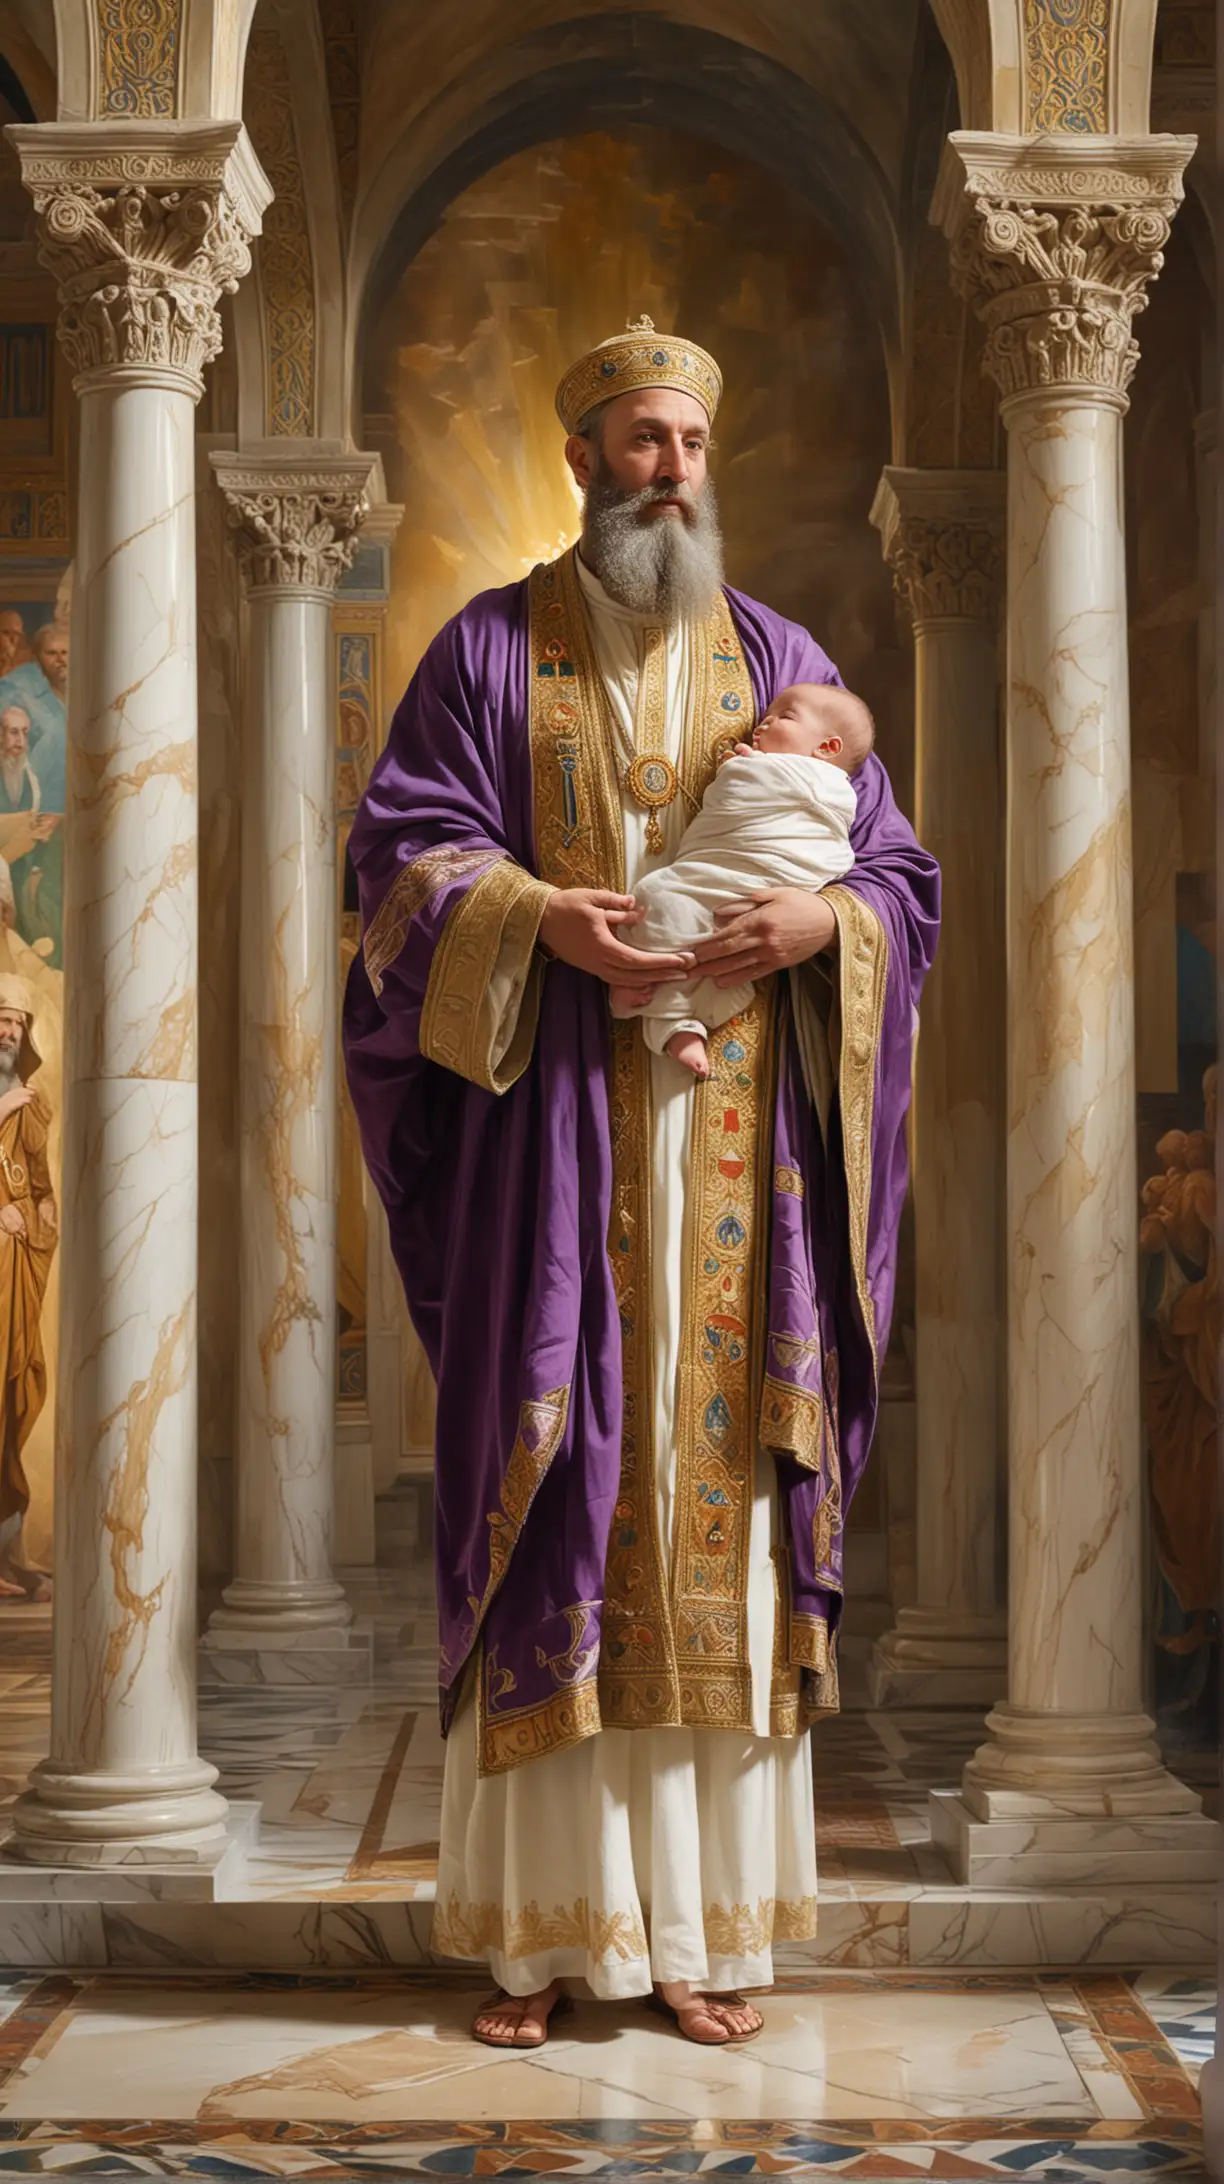 Jewish HighPriest Simeon Holding Baby Jesus in Temple